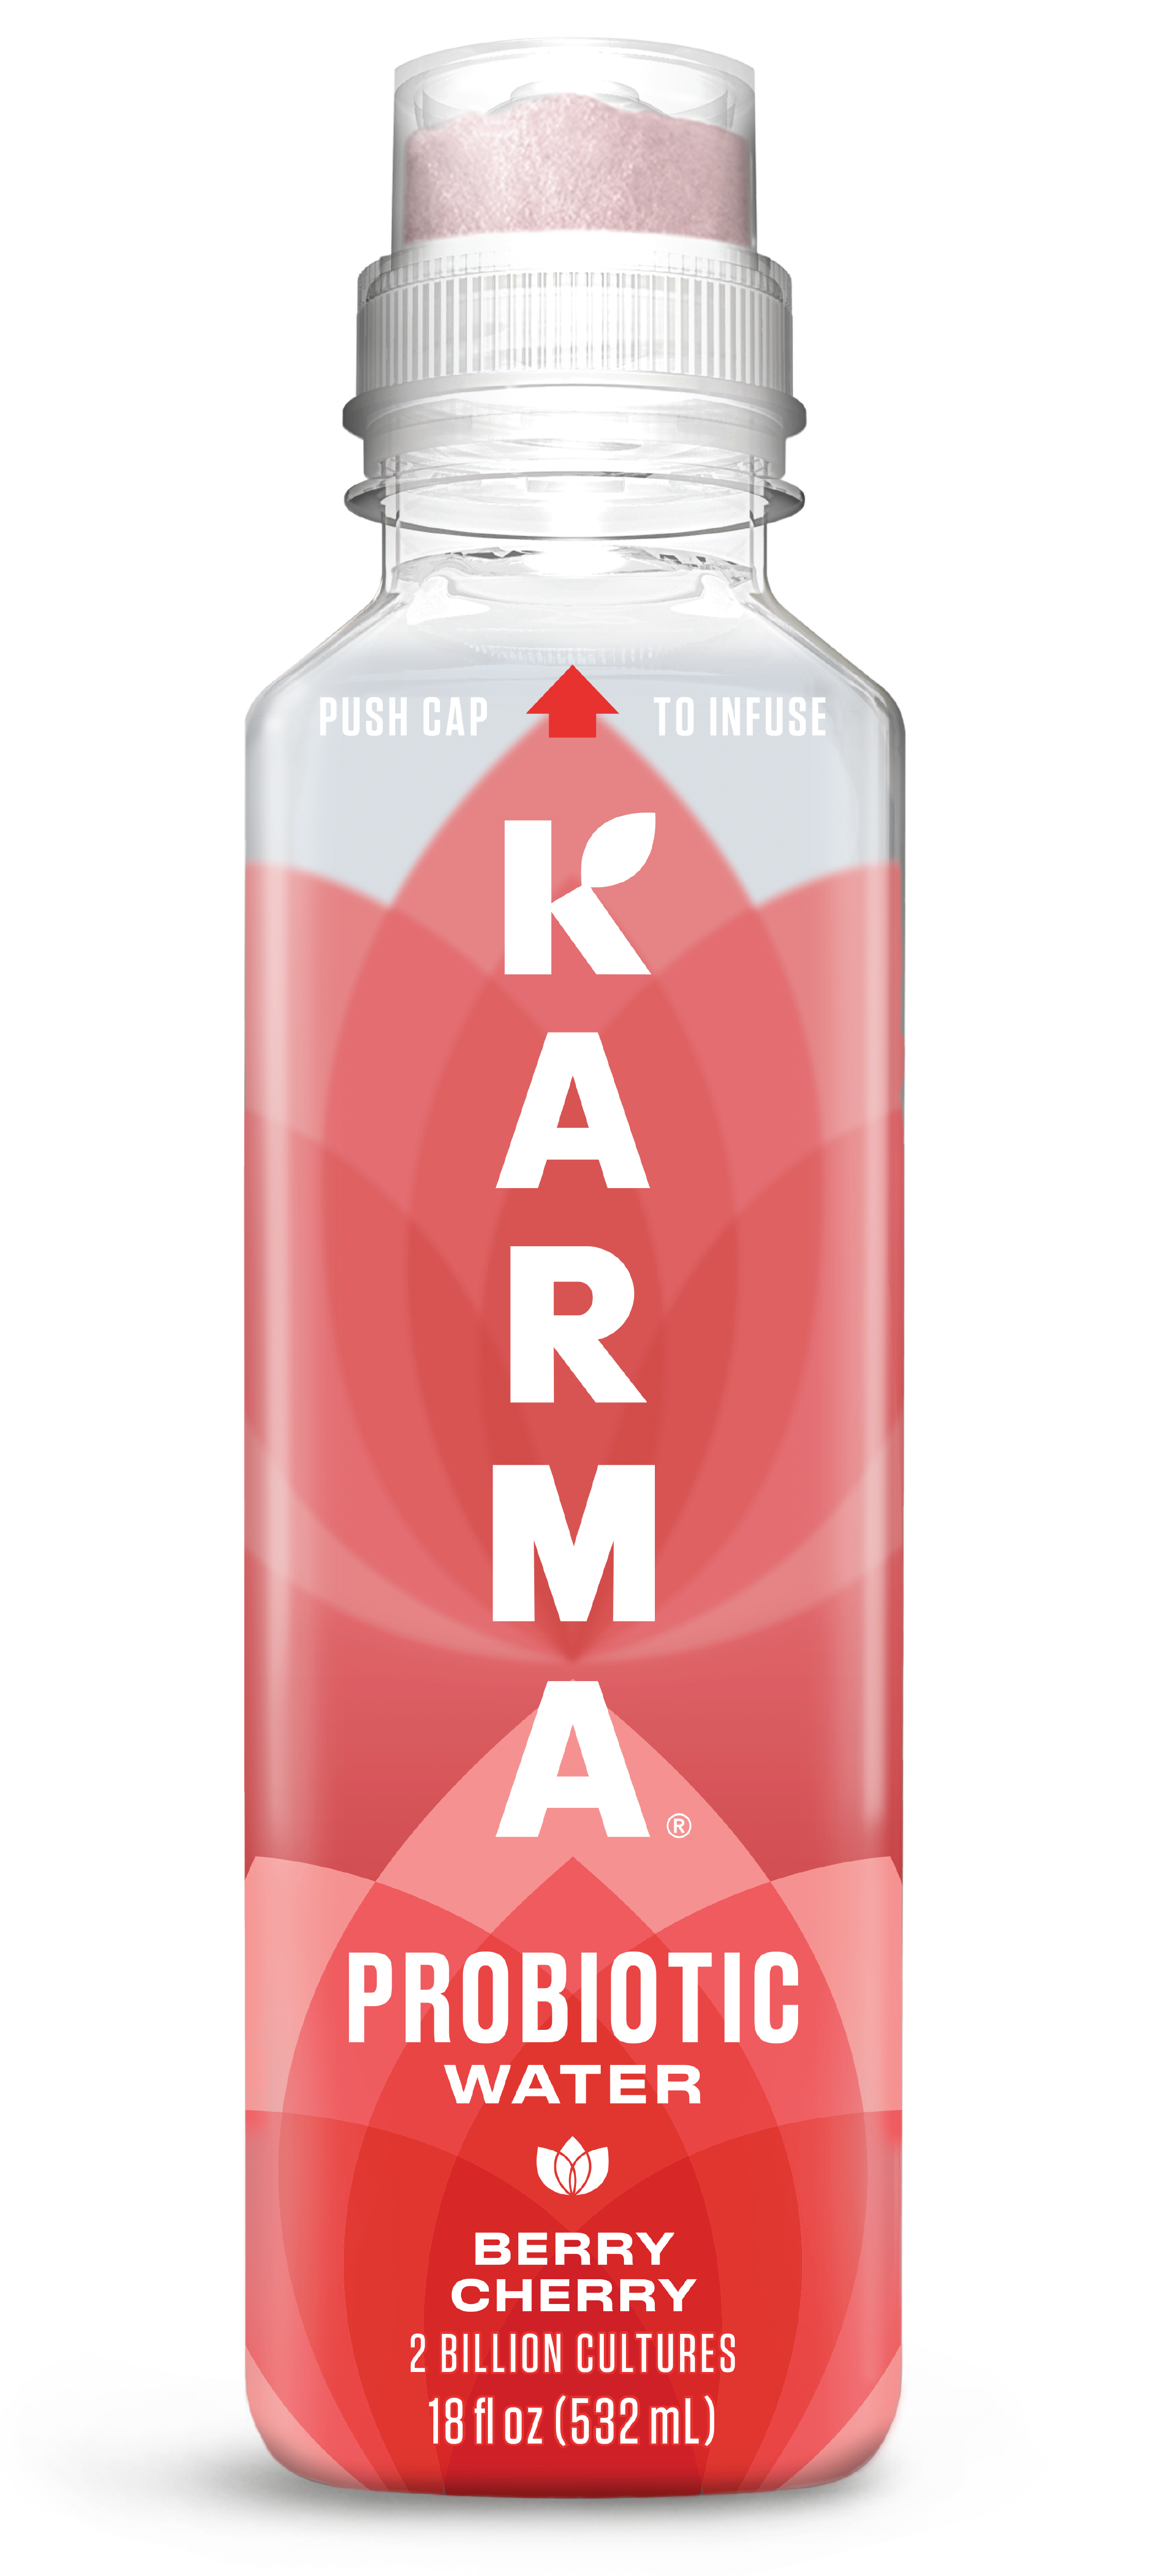 karma bottle probiotic berry cherry